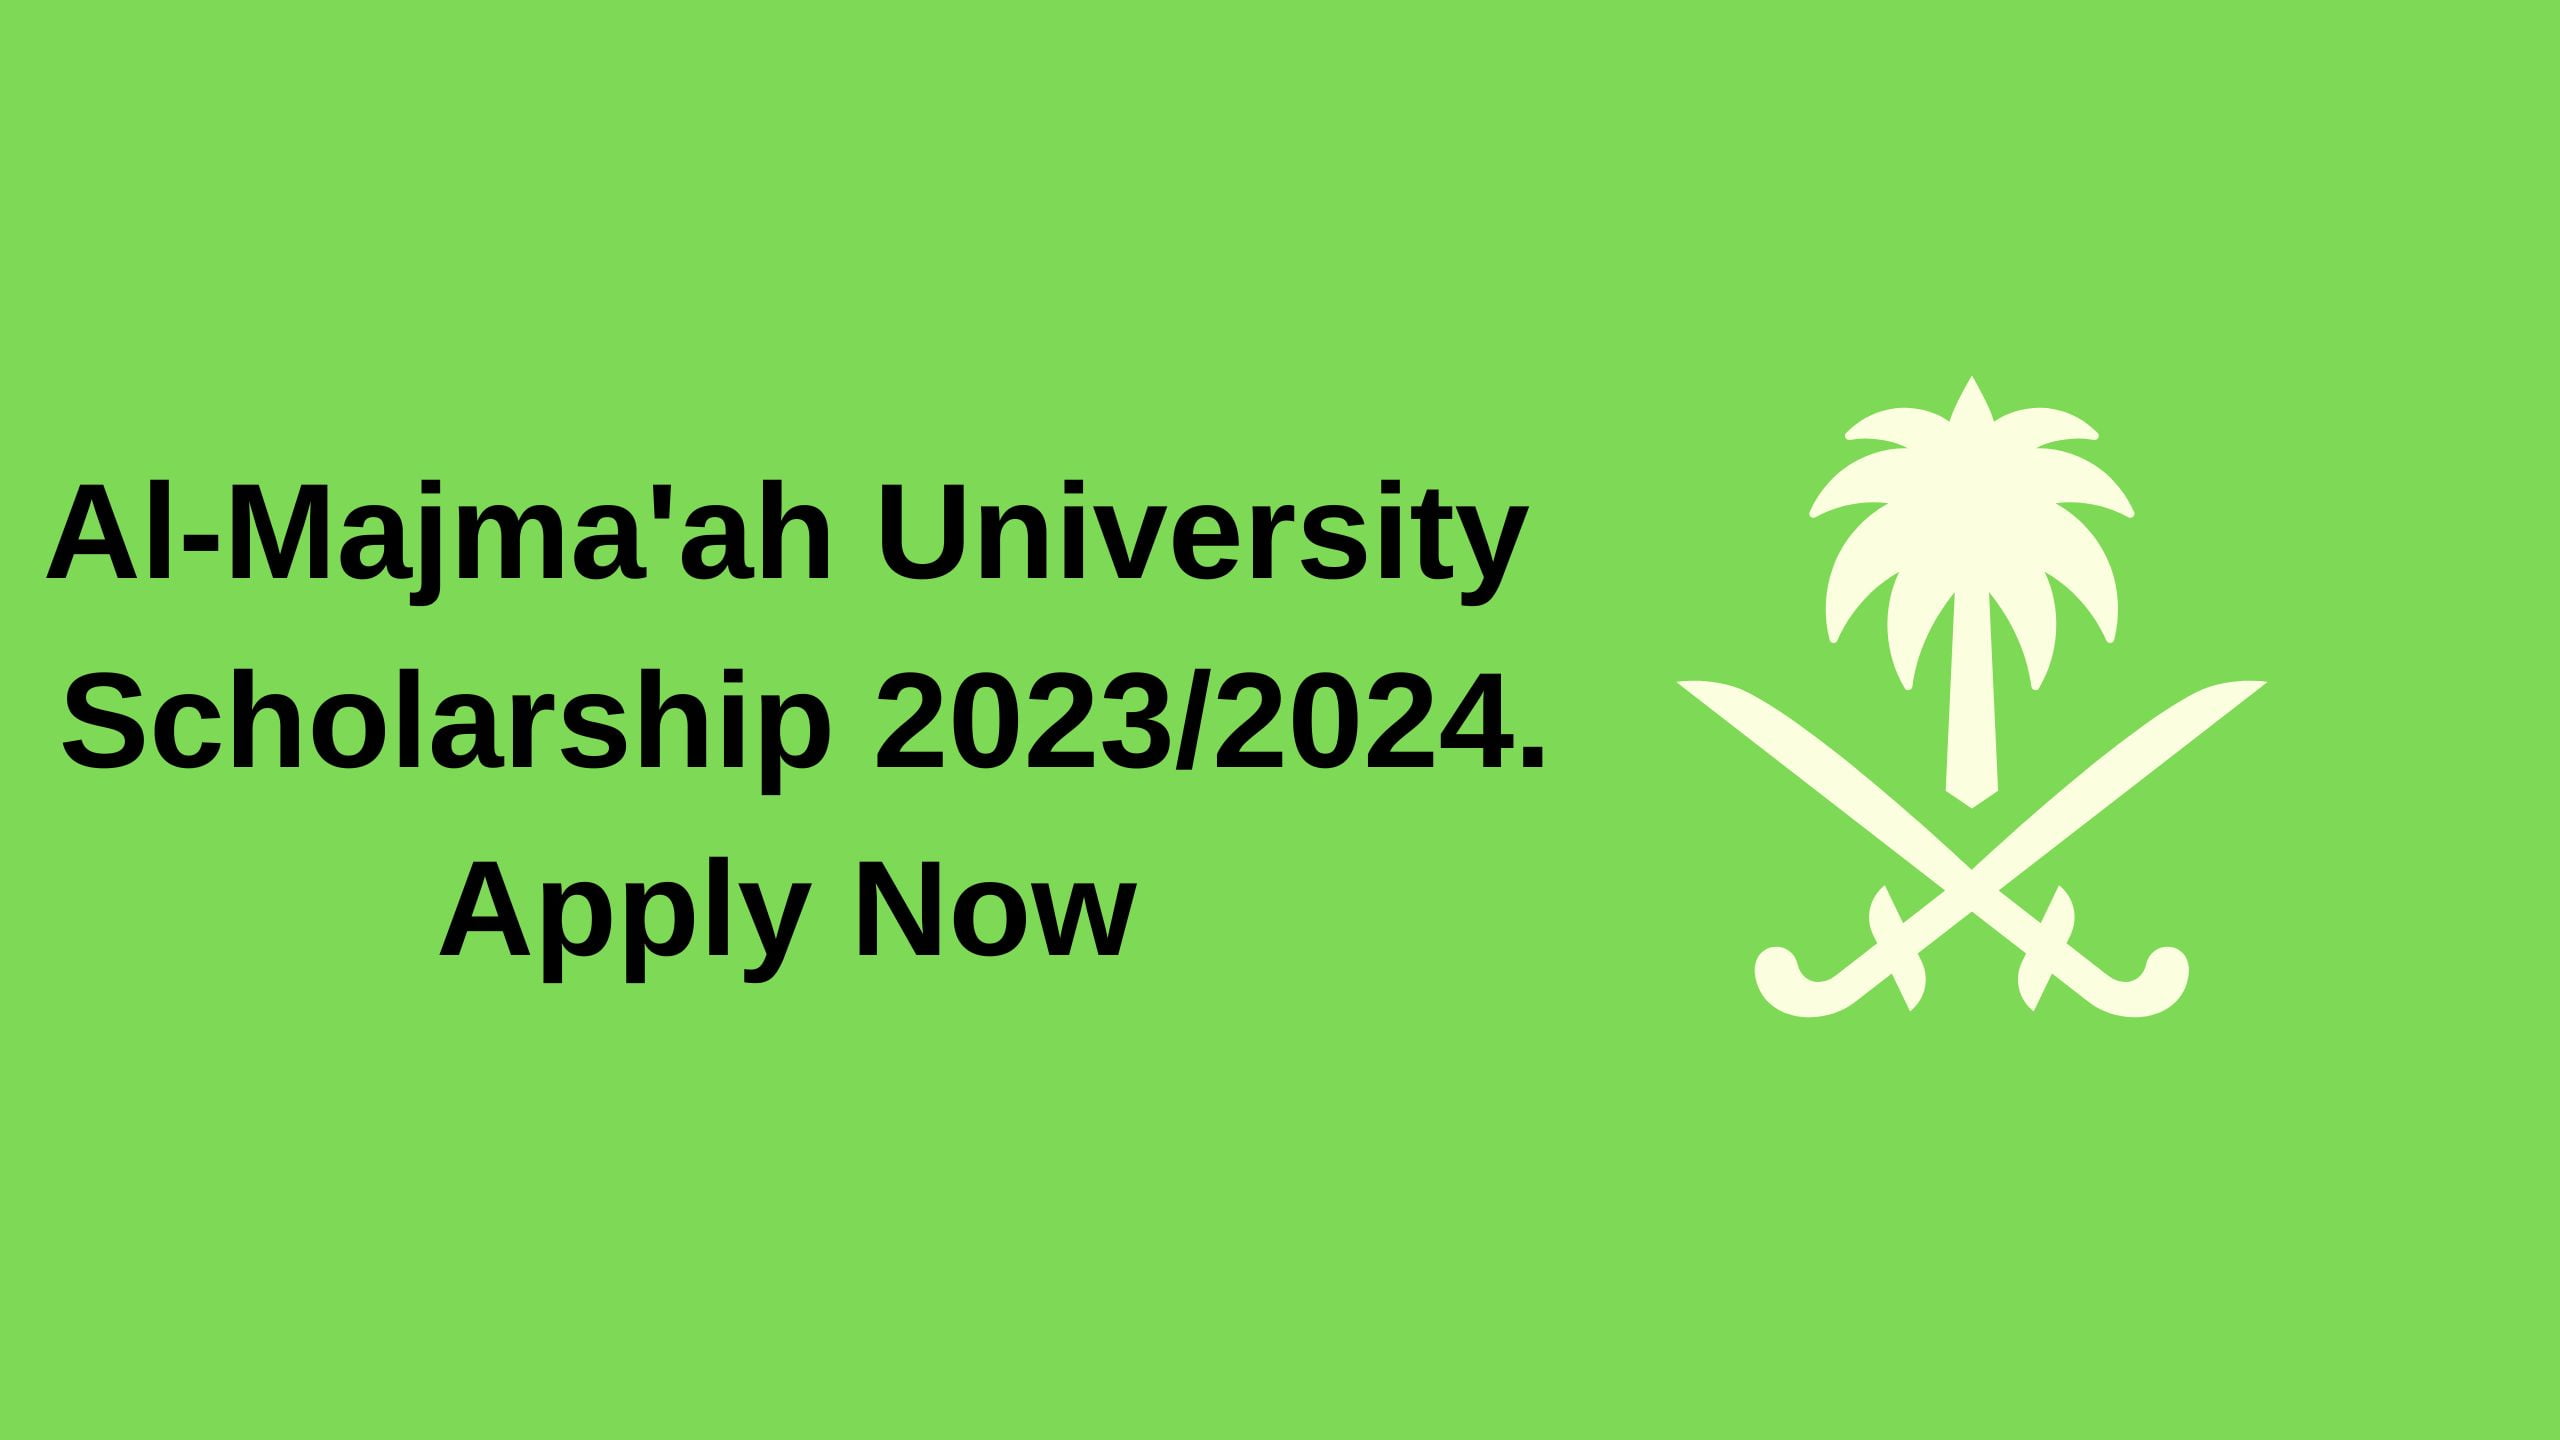 Al-Majma'ah University Scholarship 2023/2024. Apply Now